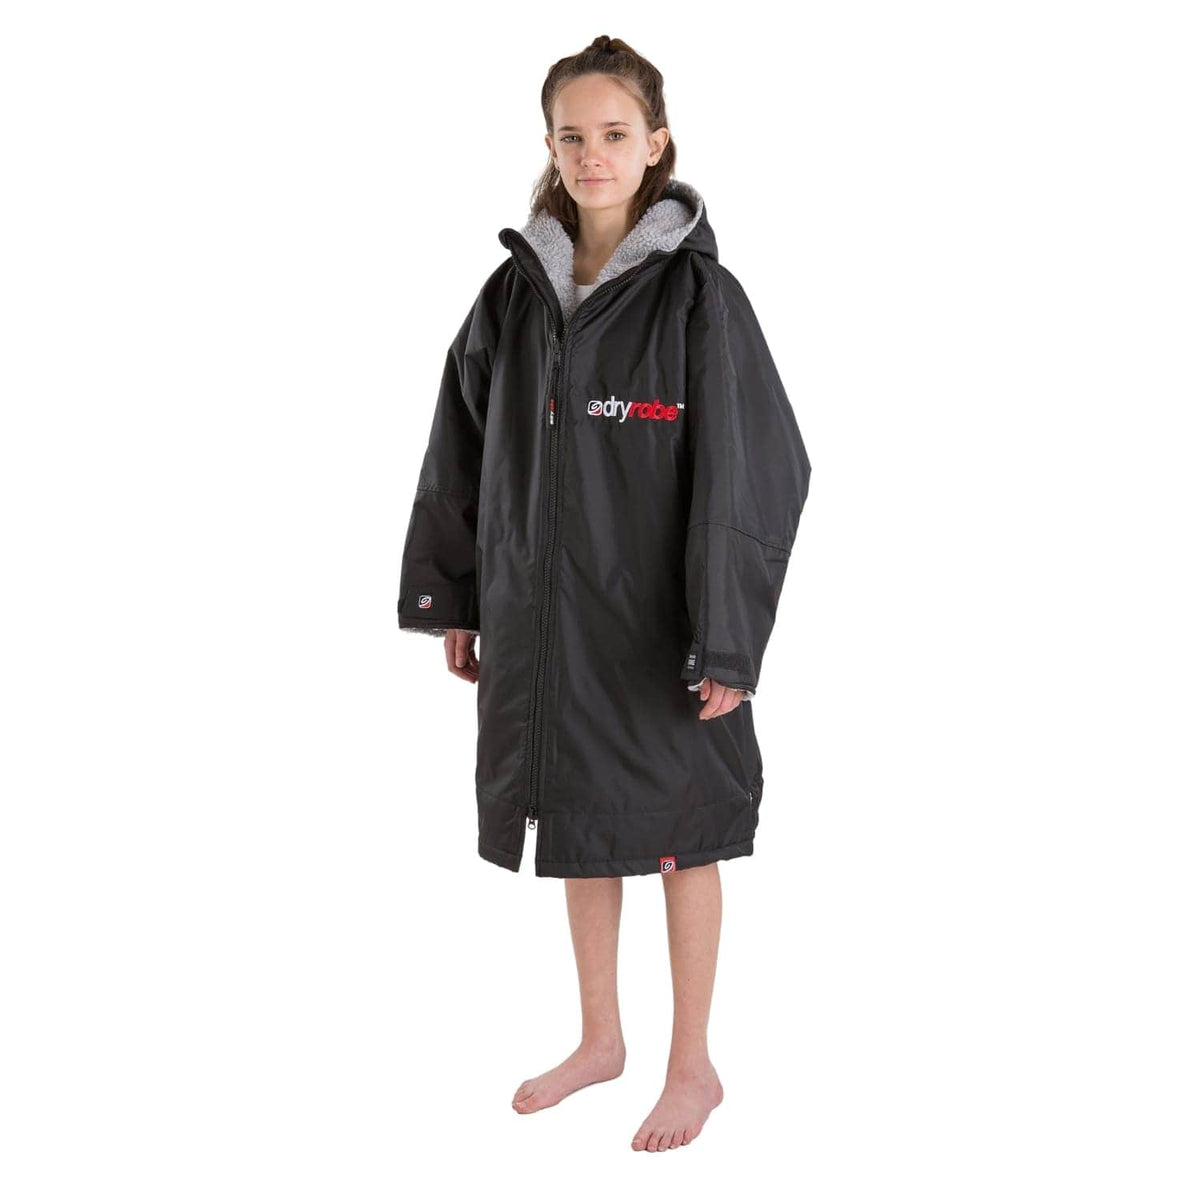 Dryrobe Kids Advance Long Sleeve Drying &amp; Changing Robe Black Grey - Changing Robe Poncho Towel by Dryrobe 10-14 Years